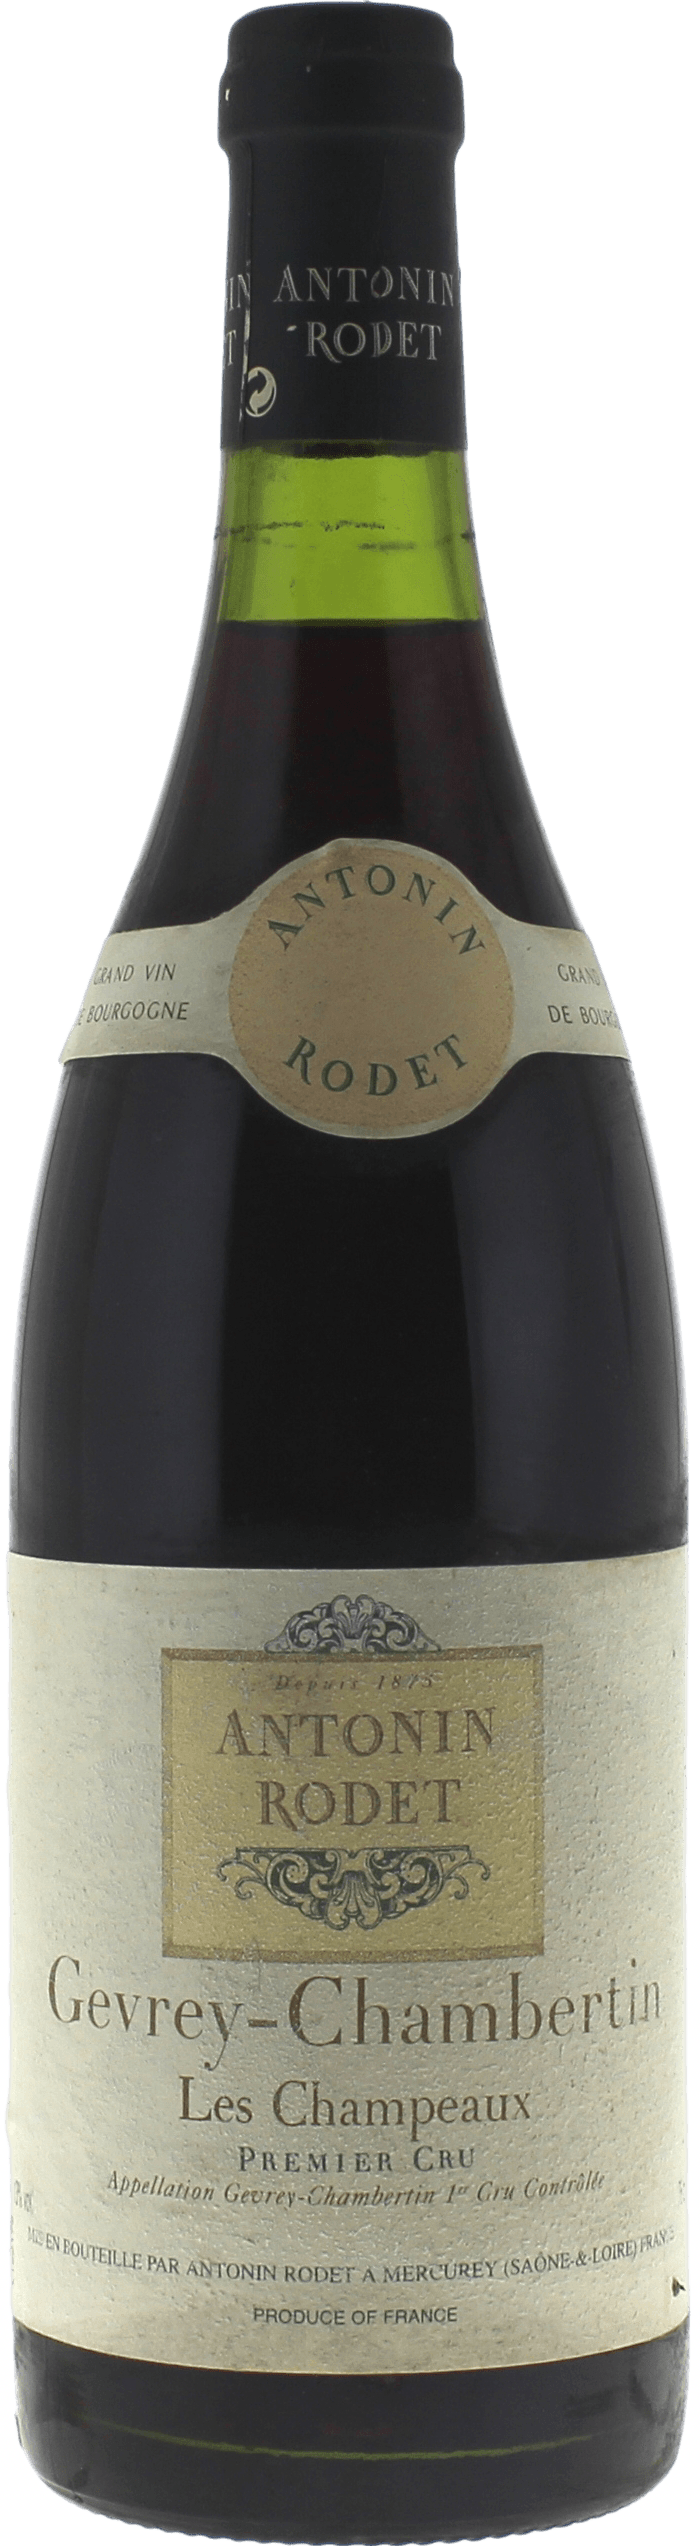 Gevrey chambertin les champeaux 1er cru 1995 Domaine RODET, Bourgogne rouge